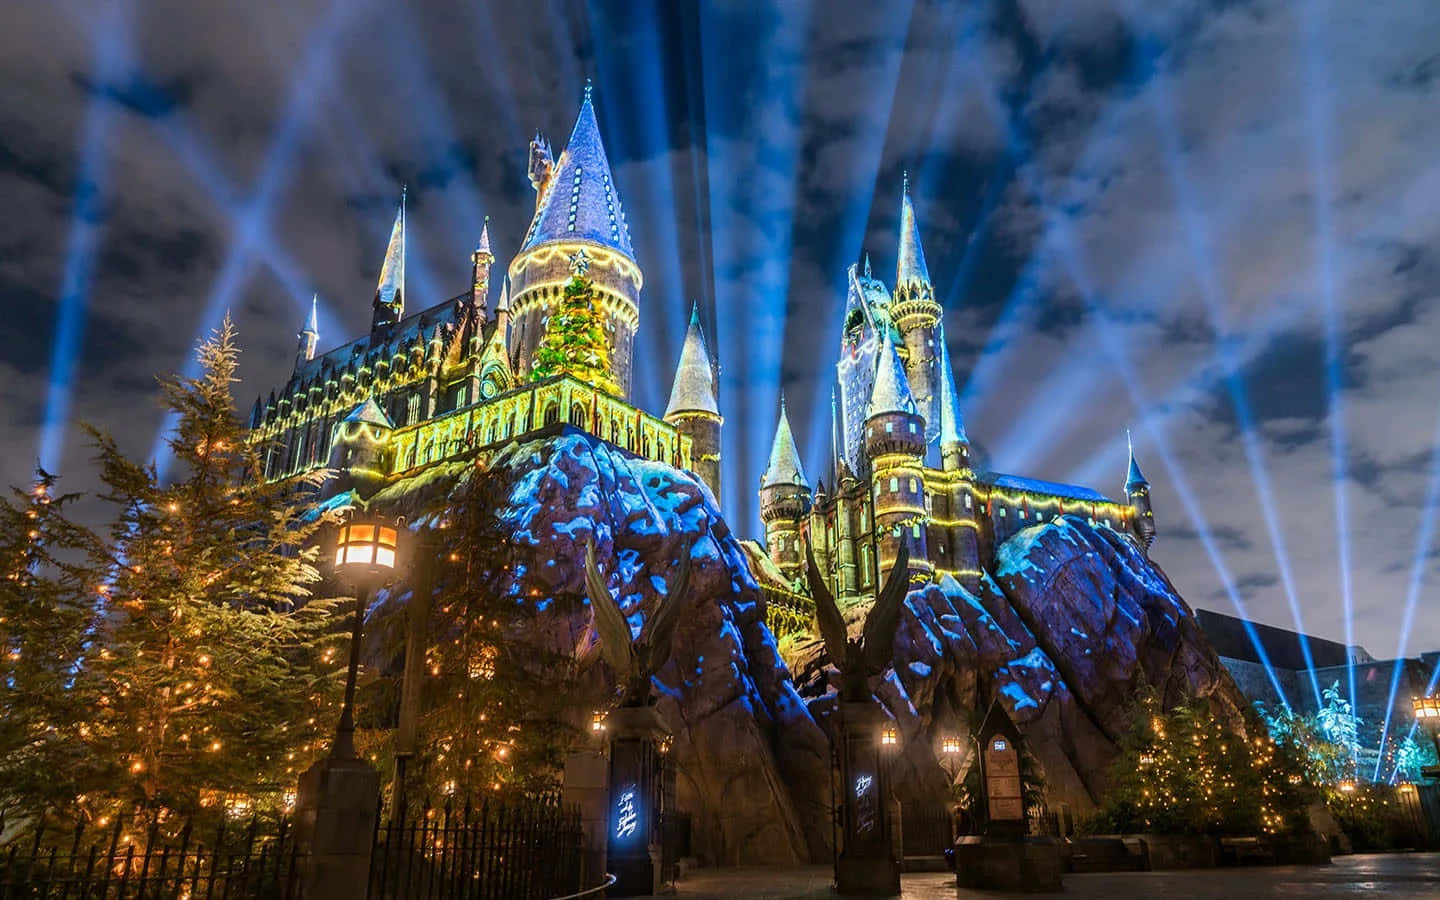 100+] Harry Potter Christmas Backgrounds